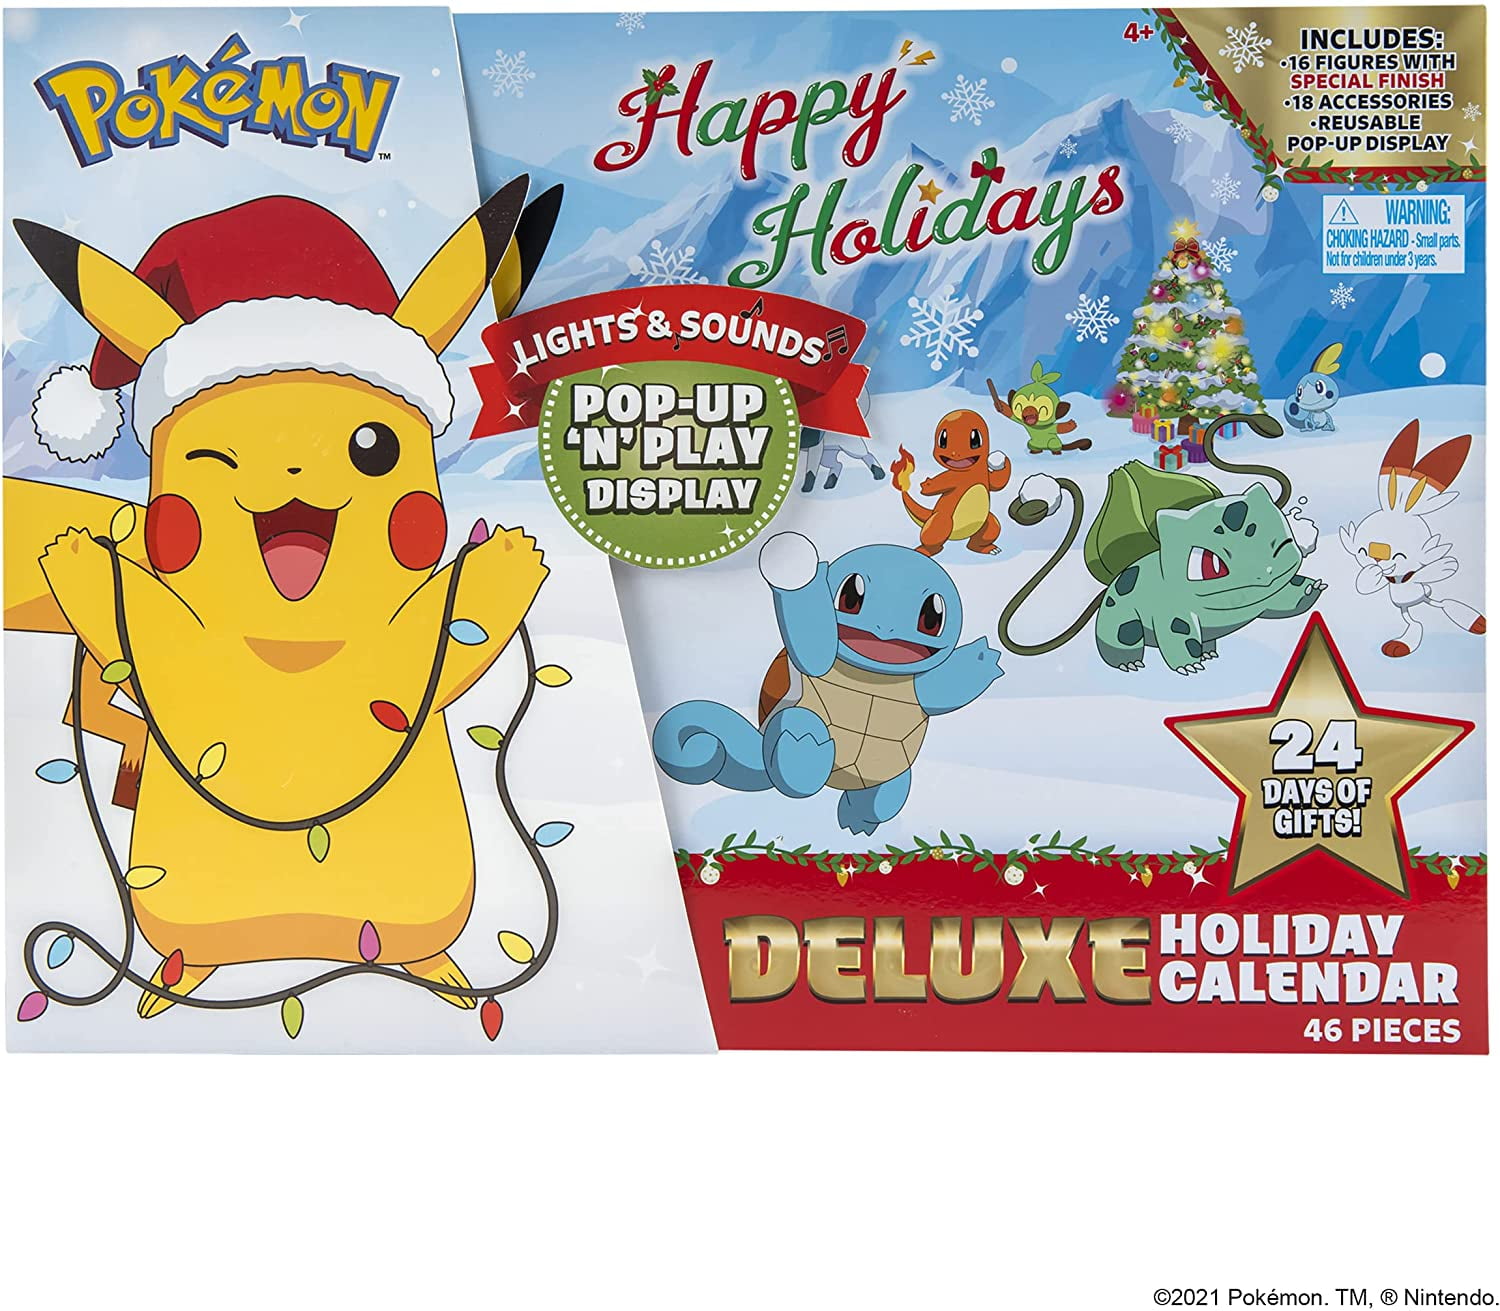 Pokemon Calendar 2021-2022: Calendar 2021-2022 with 18 colored